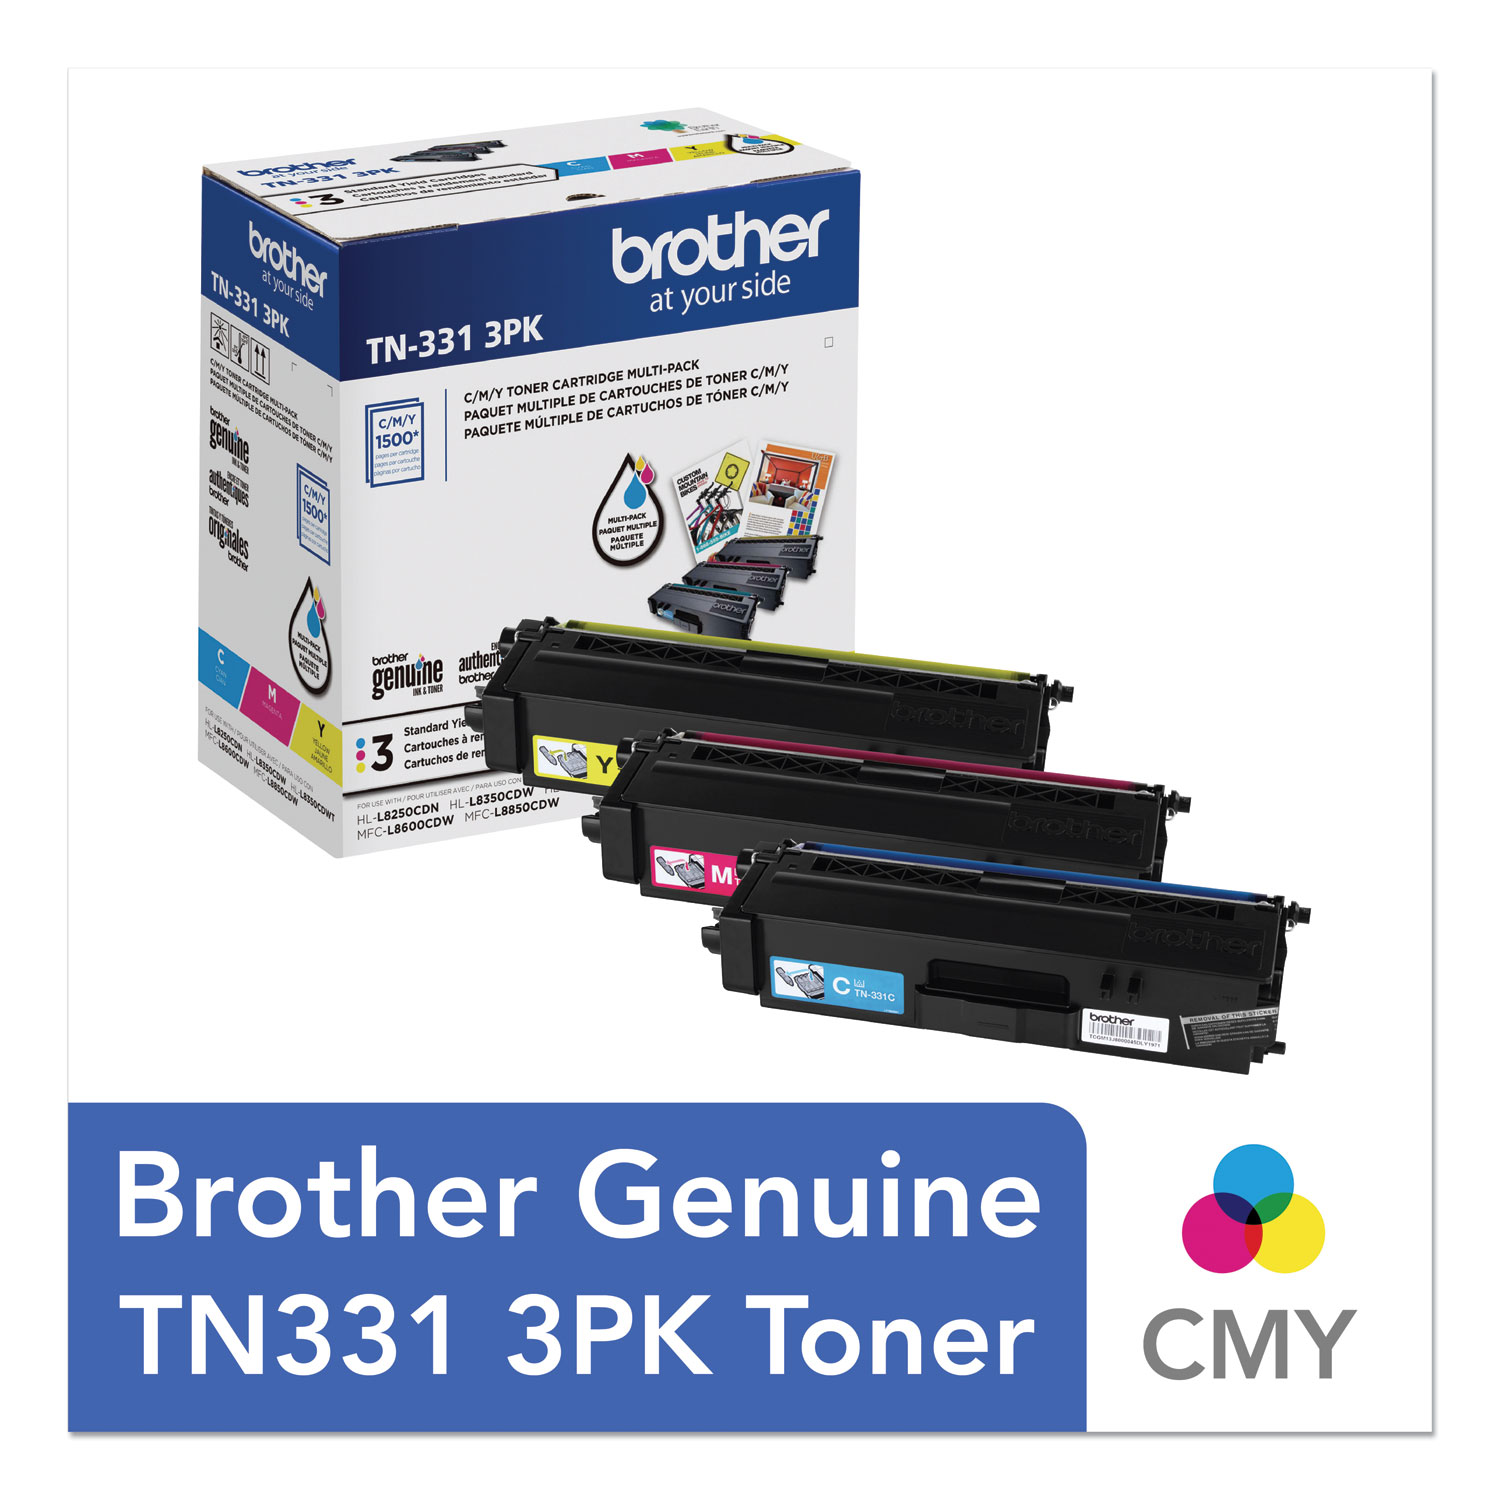  Brother TN3313PK TN3313PK Toner, 1,500 Page-Yield, Cyan/Magenta/Yellow (BRTTN3313PK) 